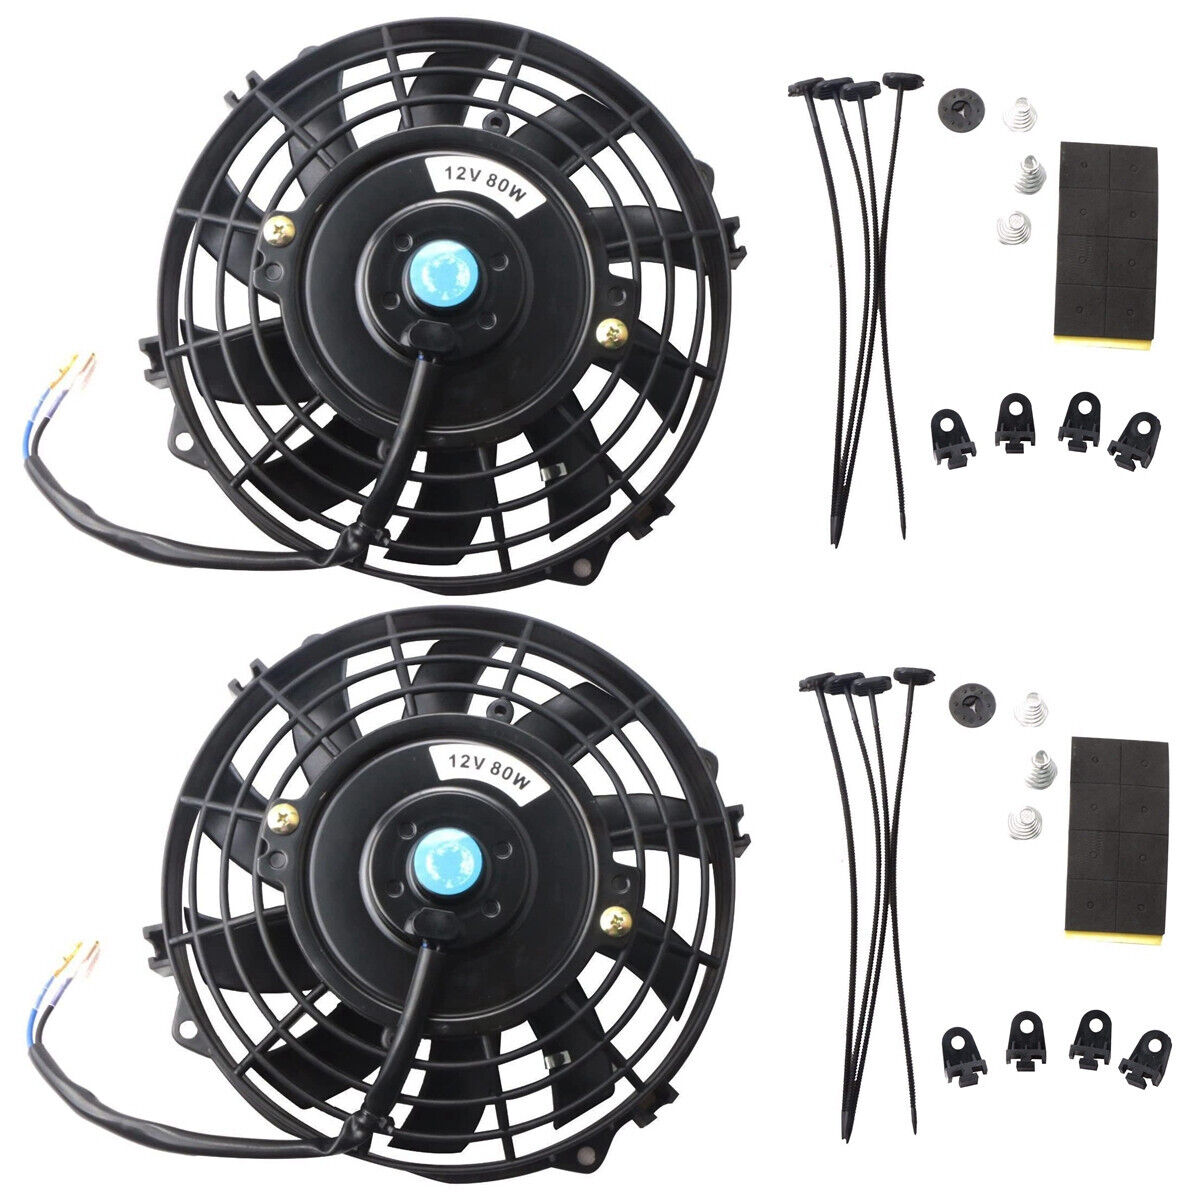 2x7 inch Black Universal Electric Radiator Slim Fan Push/Pull 12V Mounting Kit